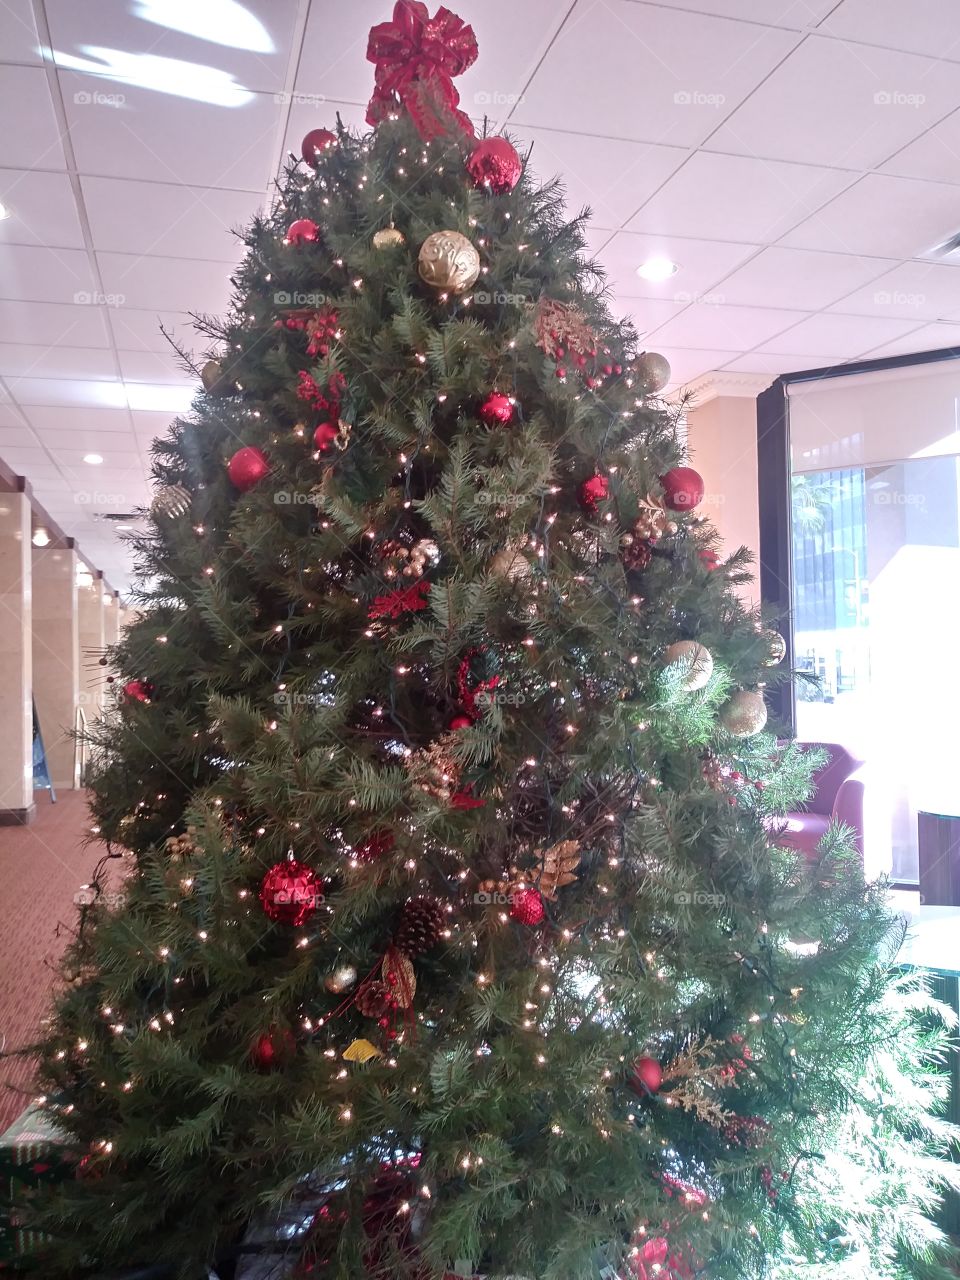 Beautiful Christmas Tree in a hotel lobby